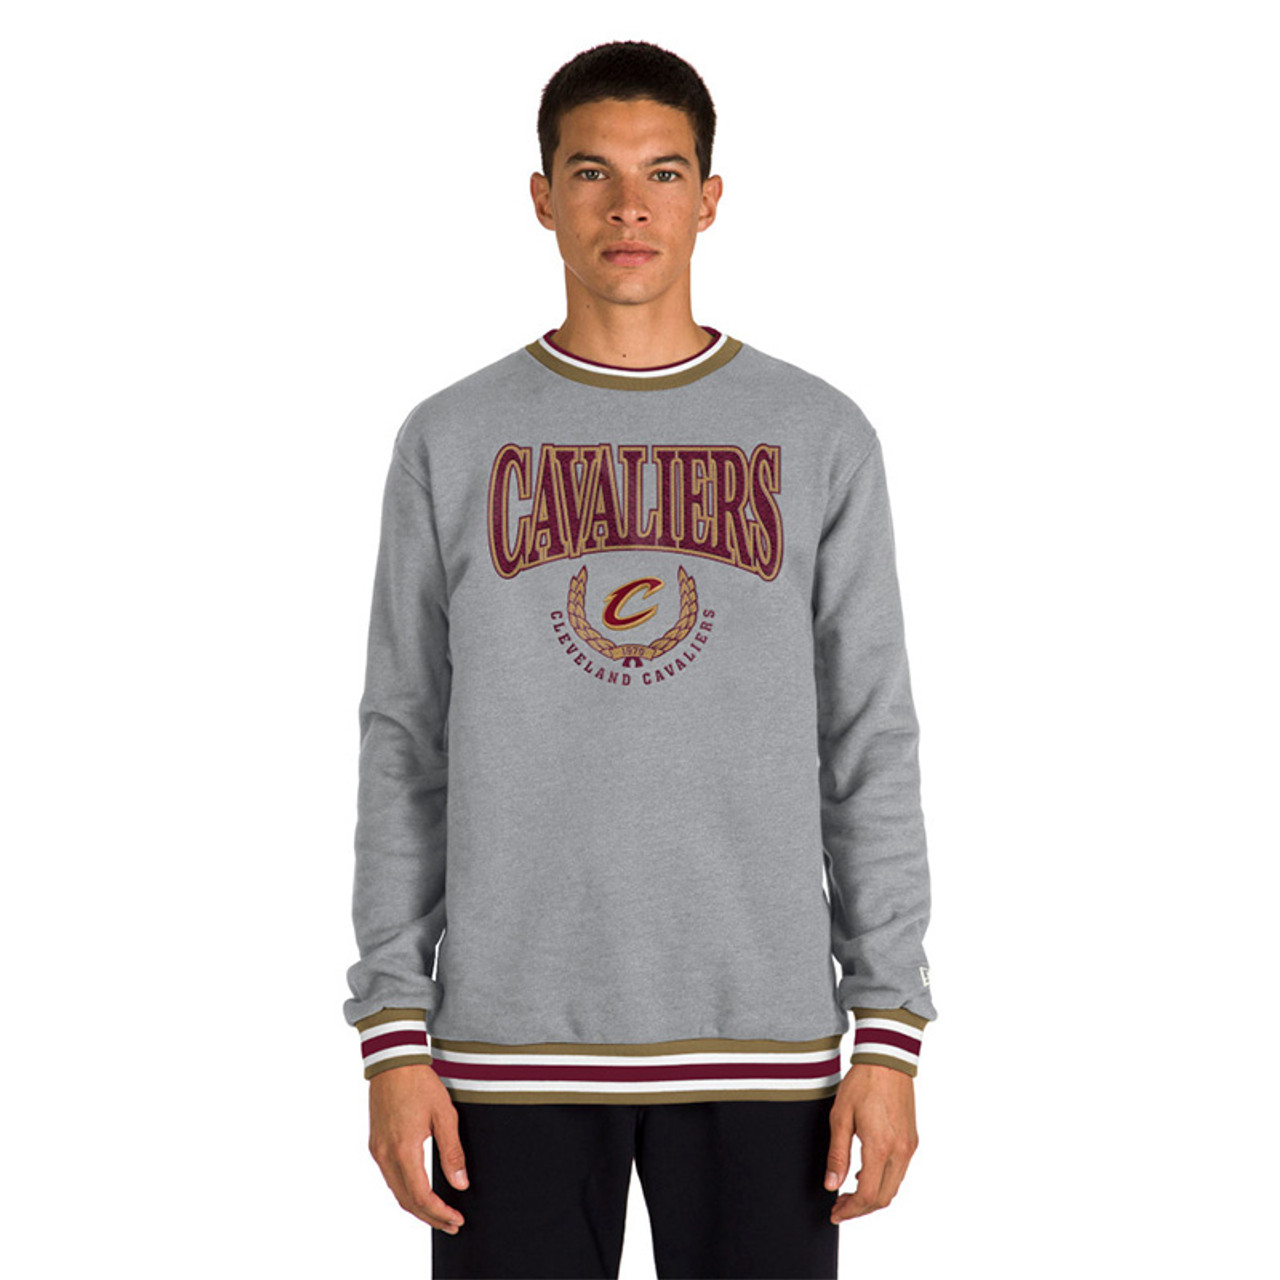 Cleveland Cavaliers Cavs 70s Retro shirt, hoodie, sweater